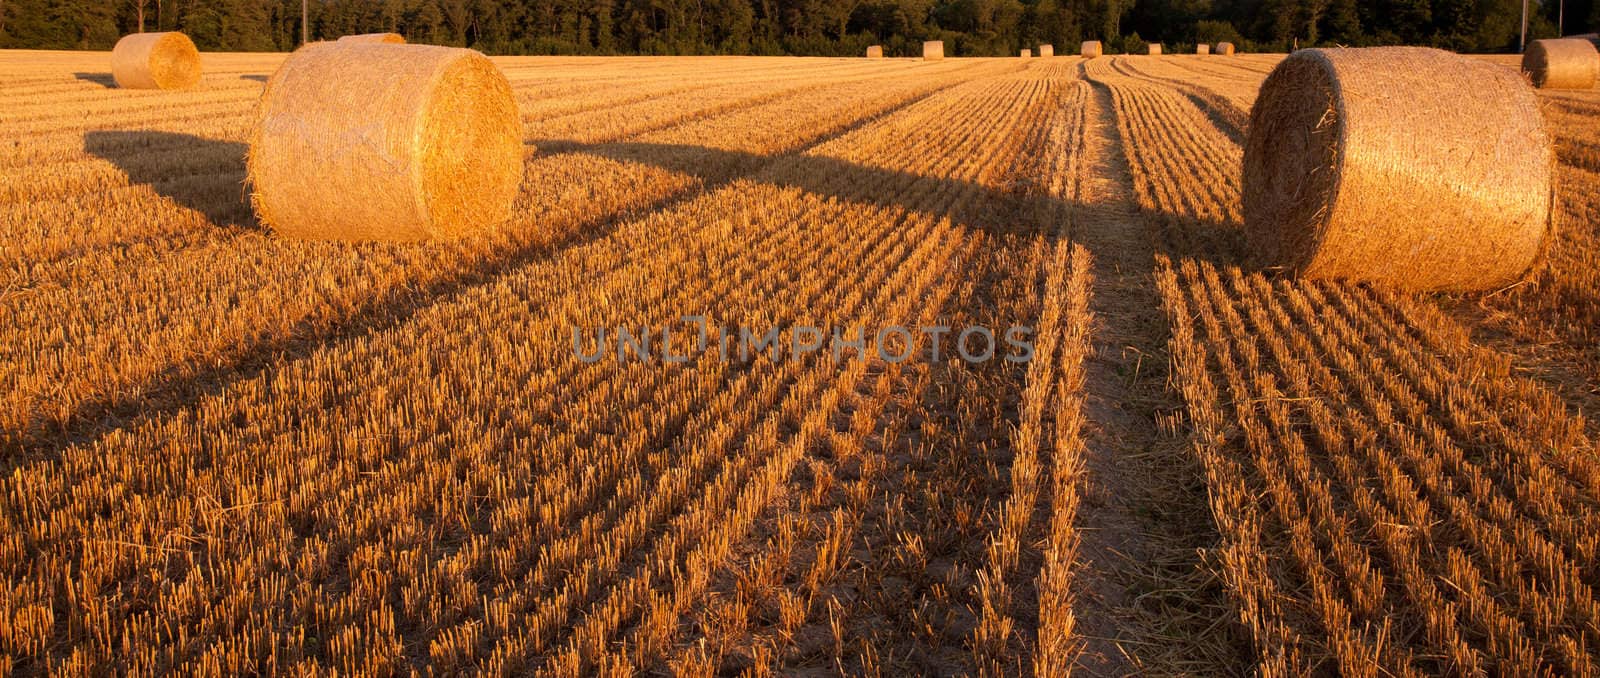 View of round wheat straw bale